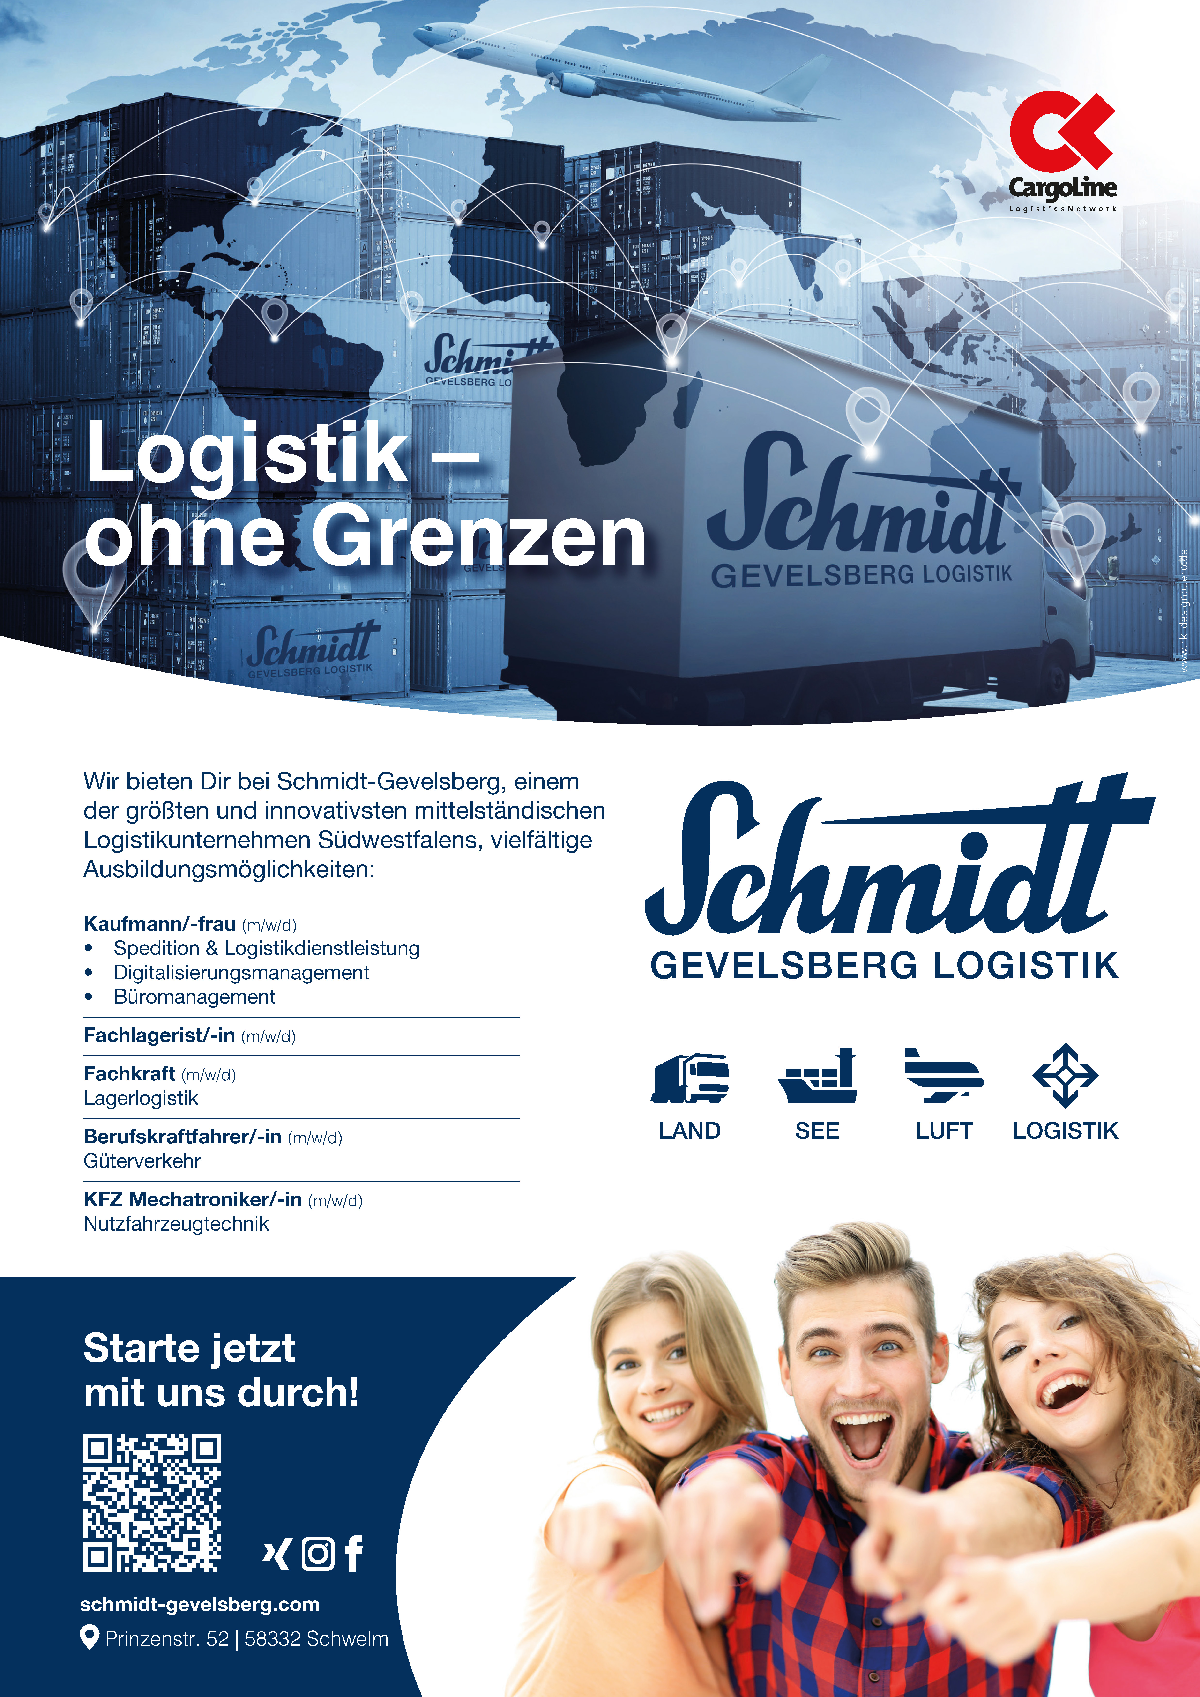 Cargoline Schmidt Gevelsberg logistik